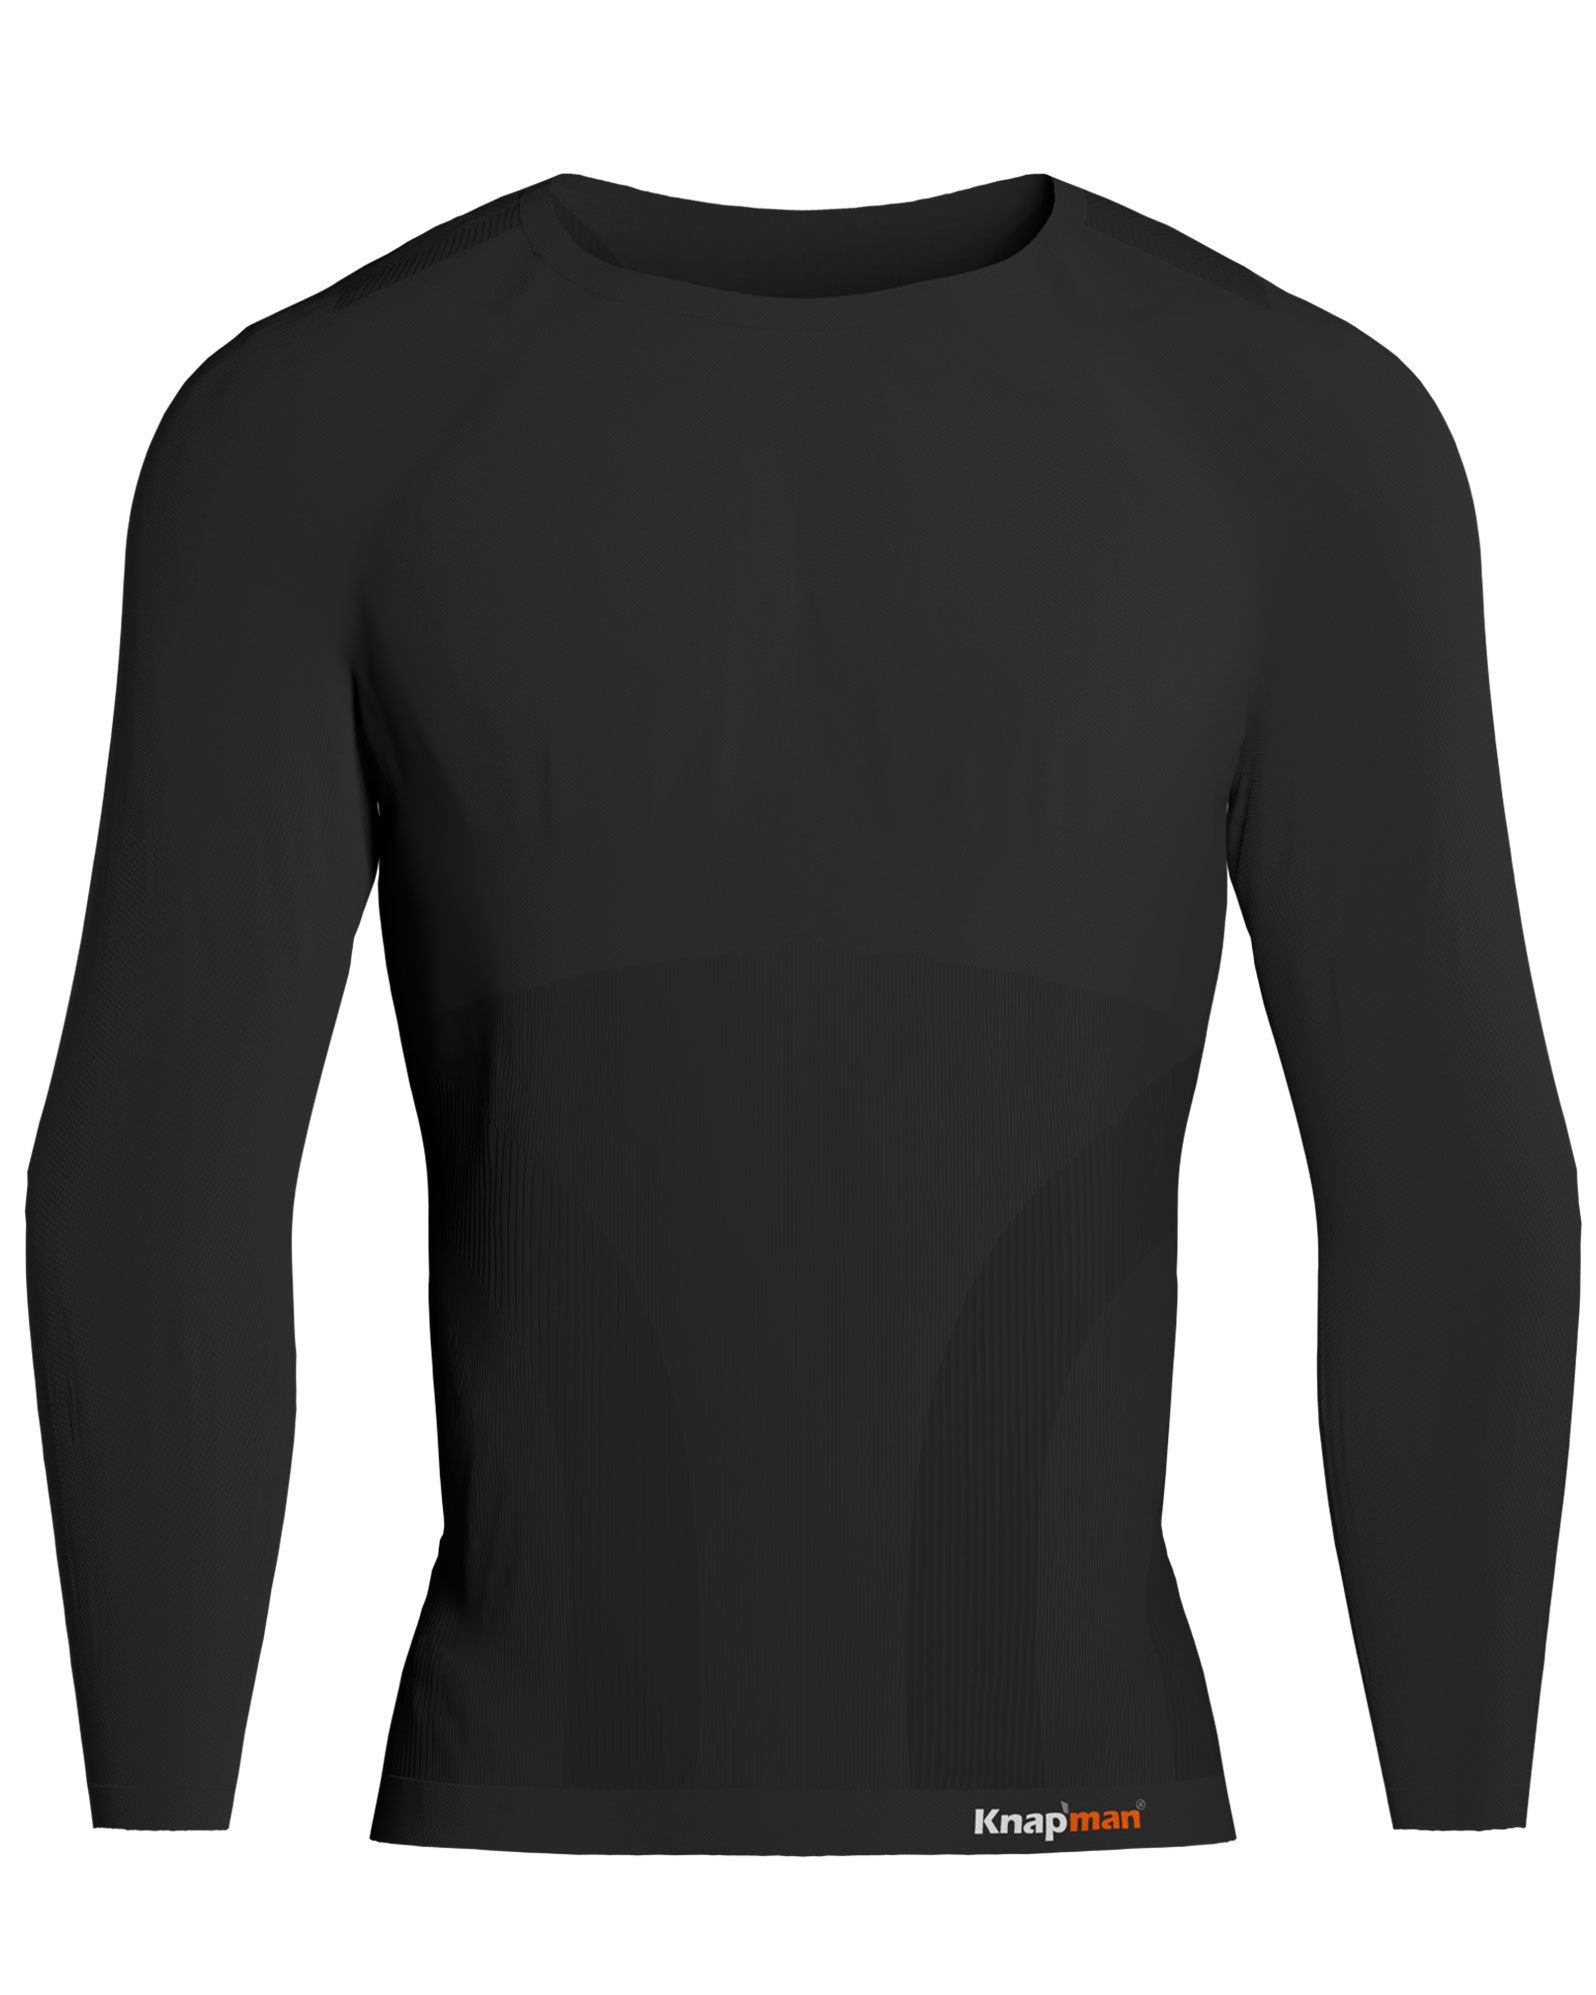 Knap'man Pro Performance Baselayer Shirt Long Sleeve Black